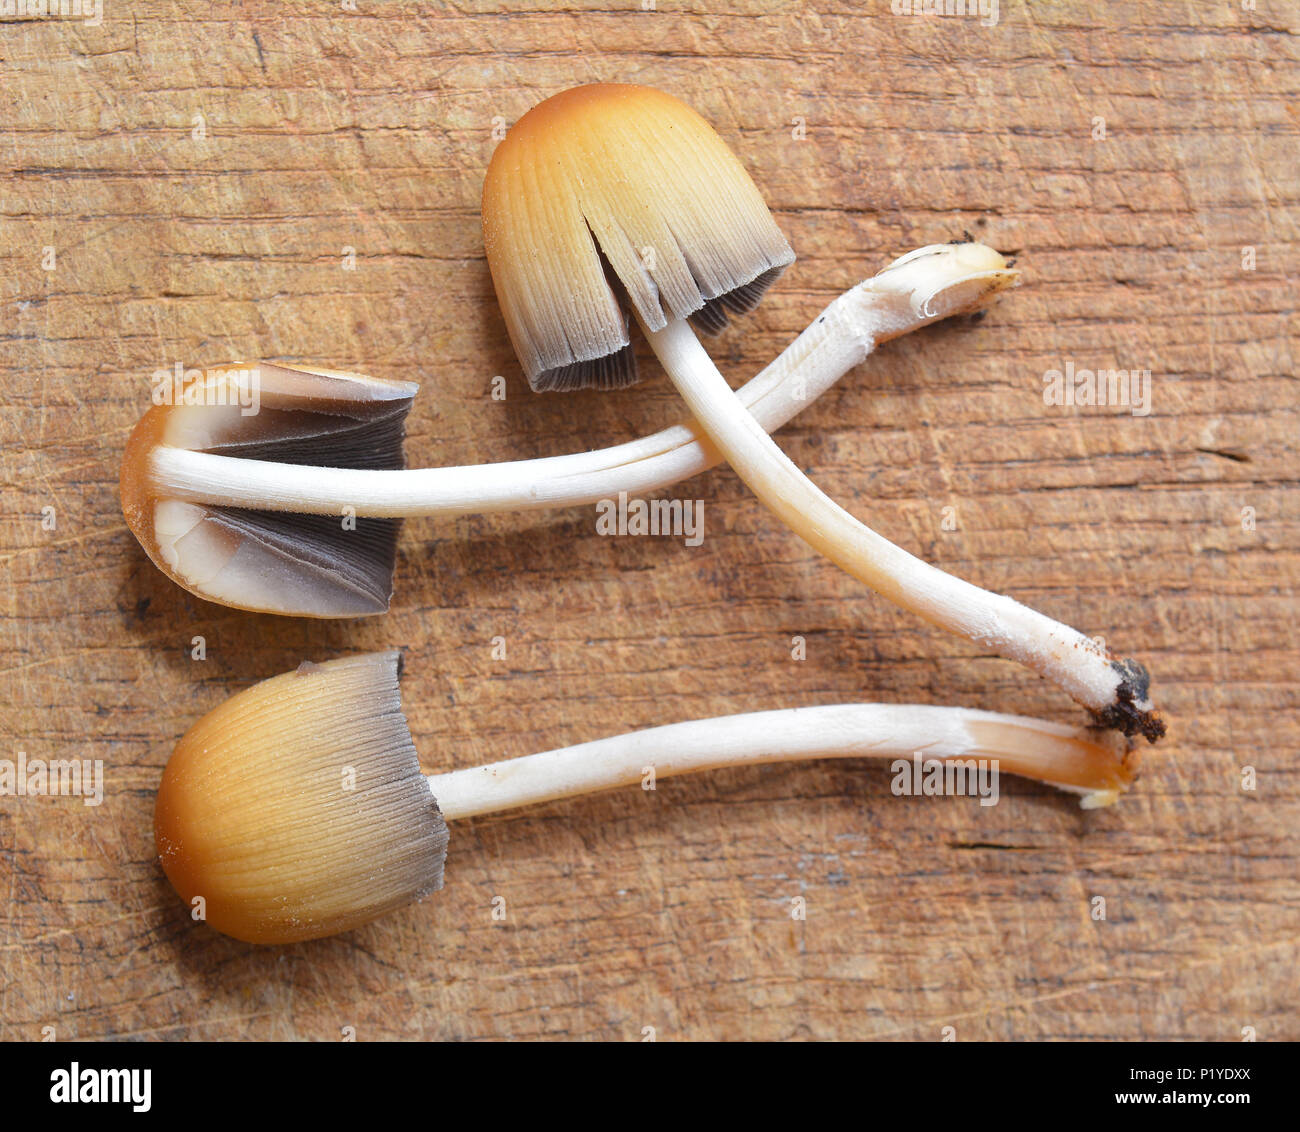 coprinus saccharinus mushrooms on wood Stock Photo